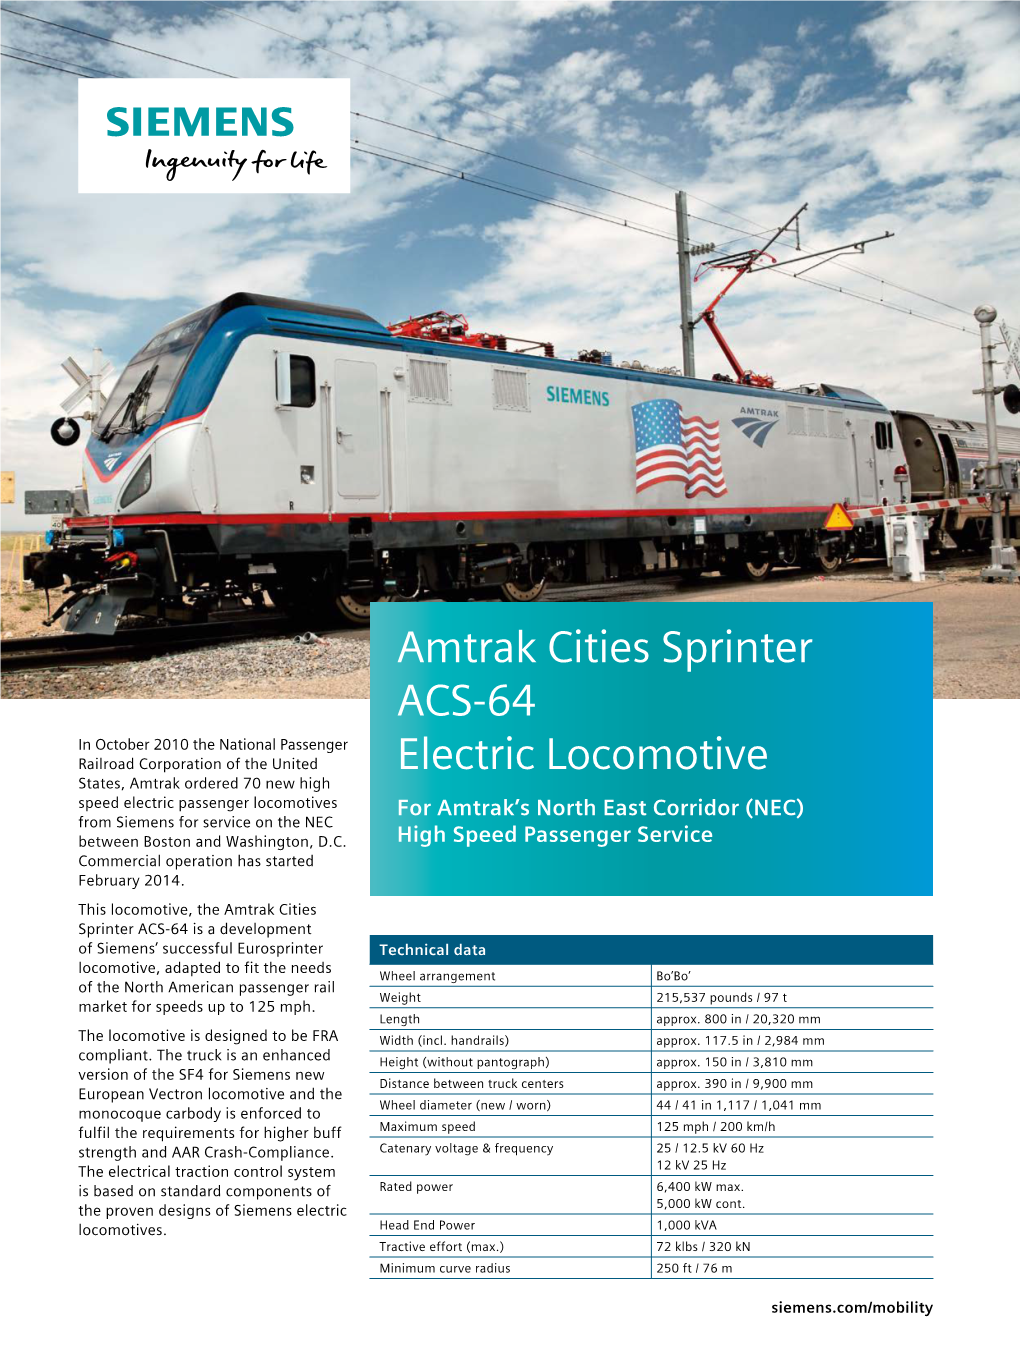 Amtrak Cities Sprinter ACS-64 Electric Locomotive